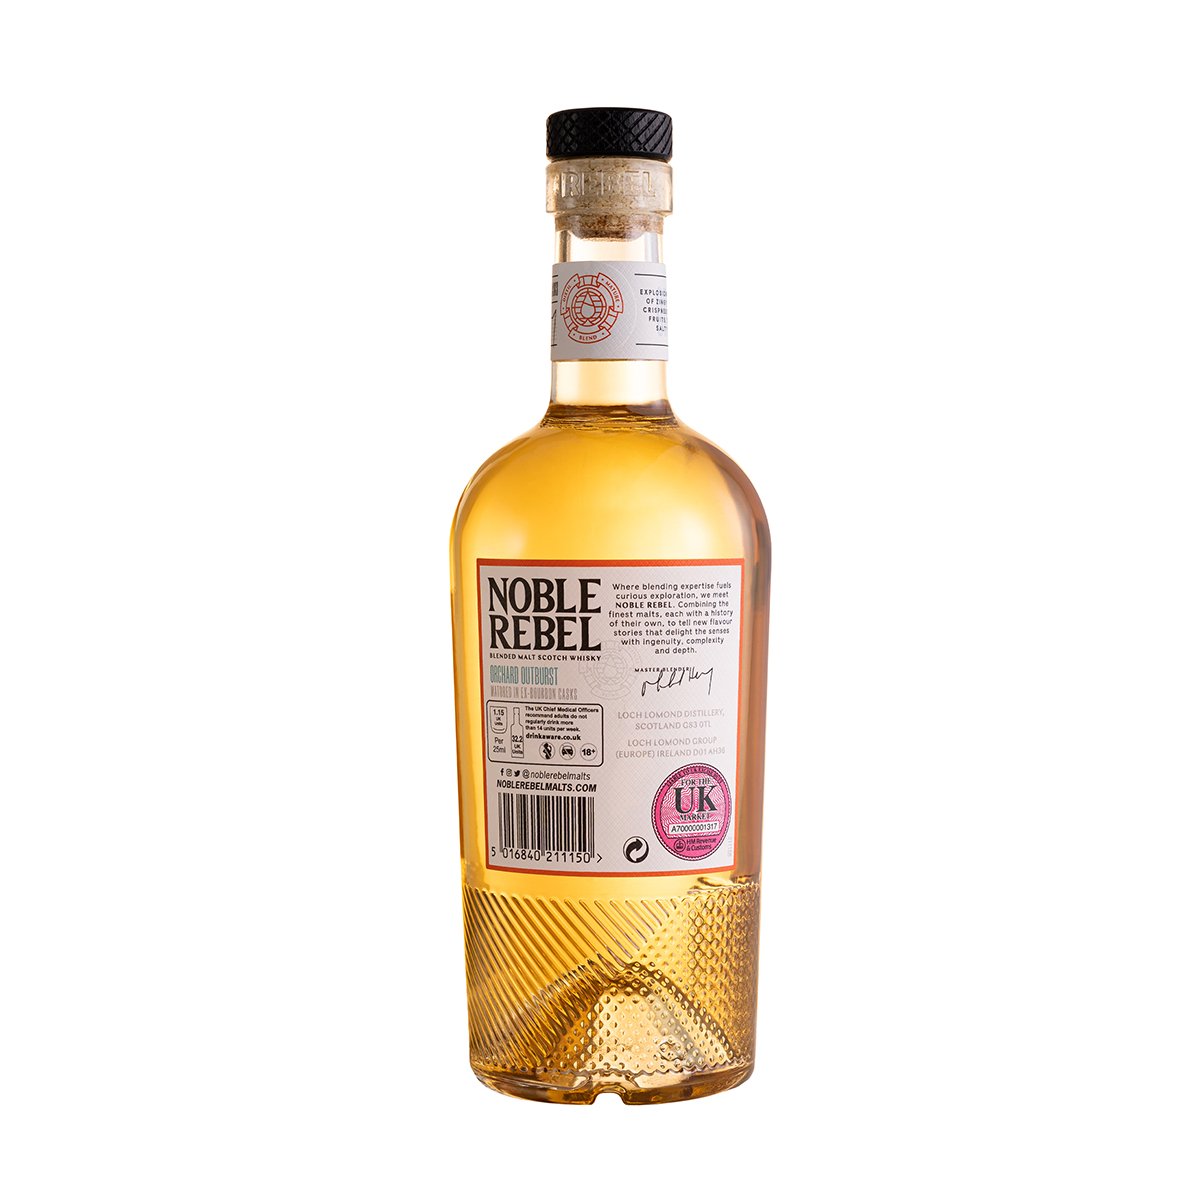 Noble Rebel Whisky - Orchard Outburst - Loch Lomond Group